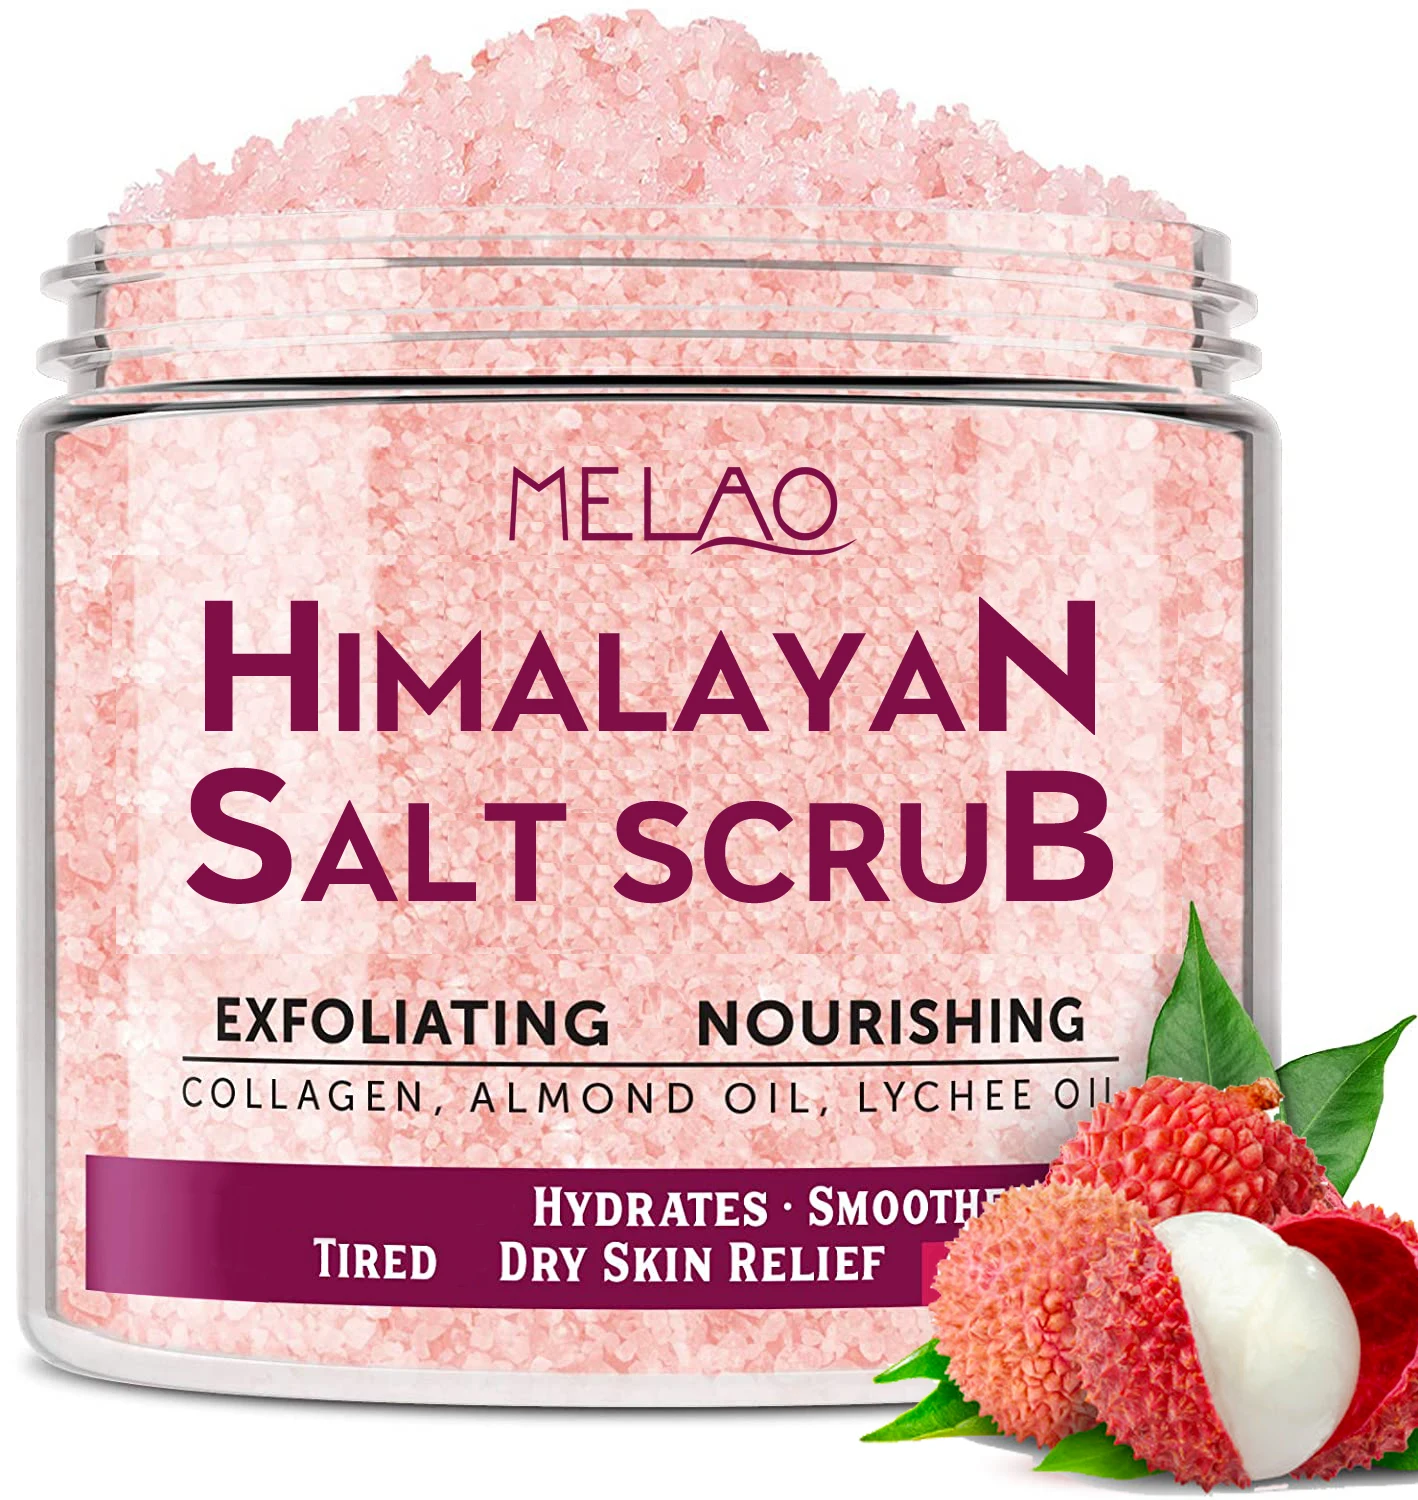 

Private label exfoliator 100% natural moisturizer Natural Organic Private Label Skin Pink Body Himalayan Salt Scrub